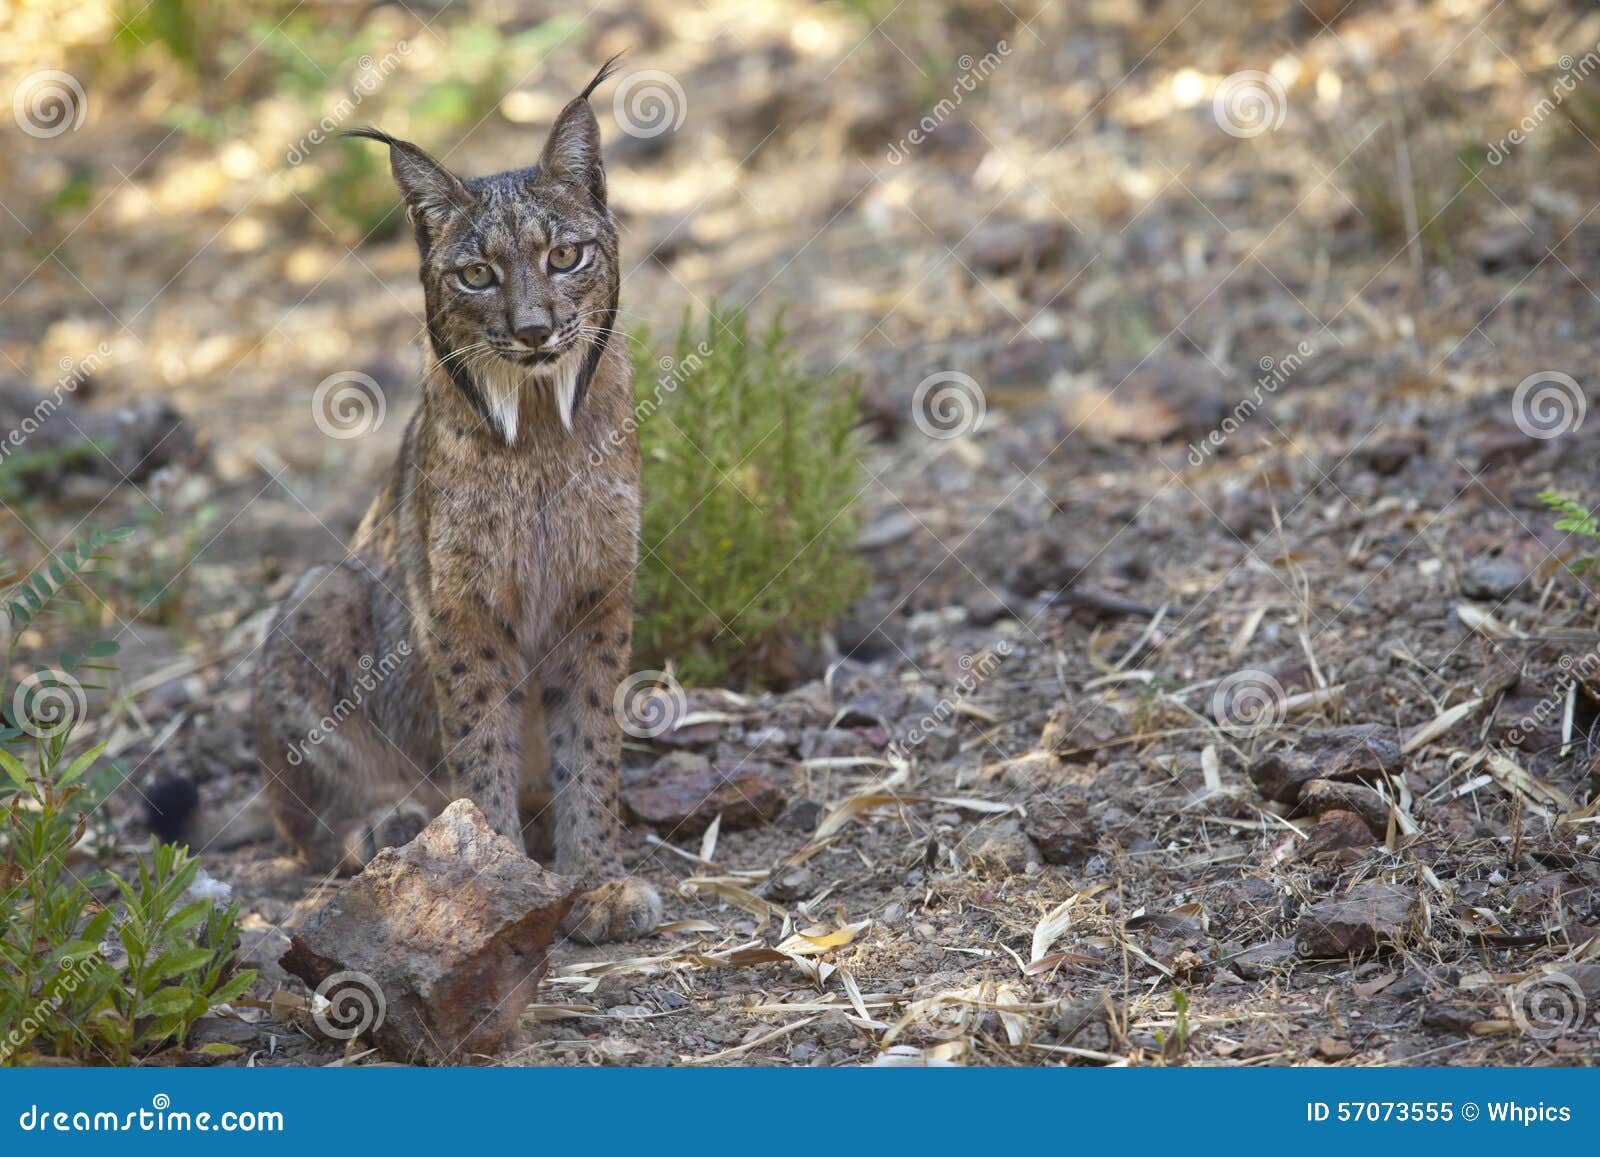 iberian lynx sitting on alert